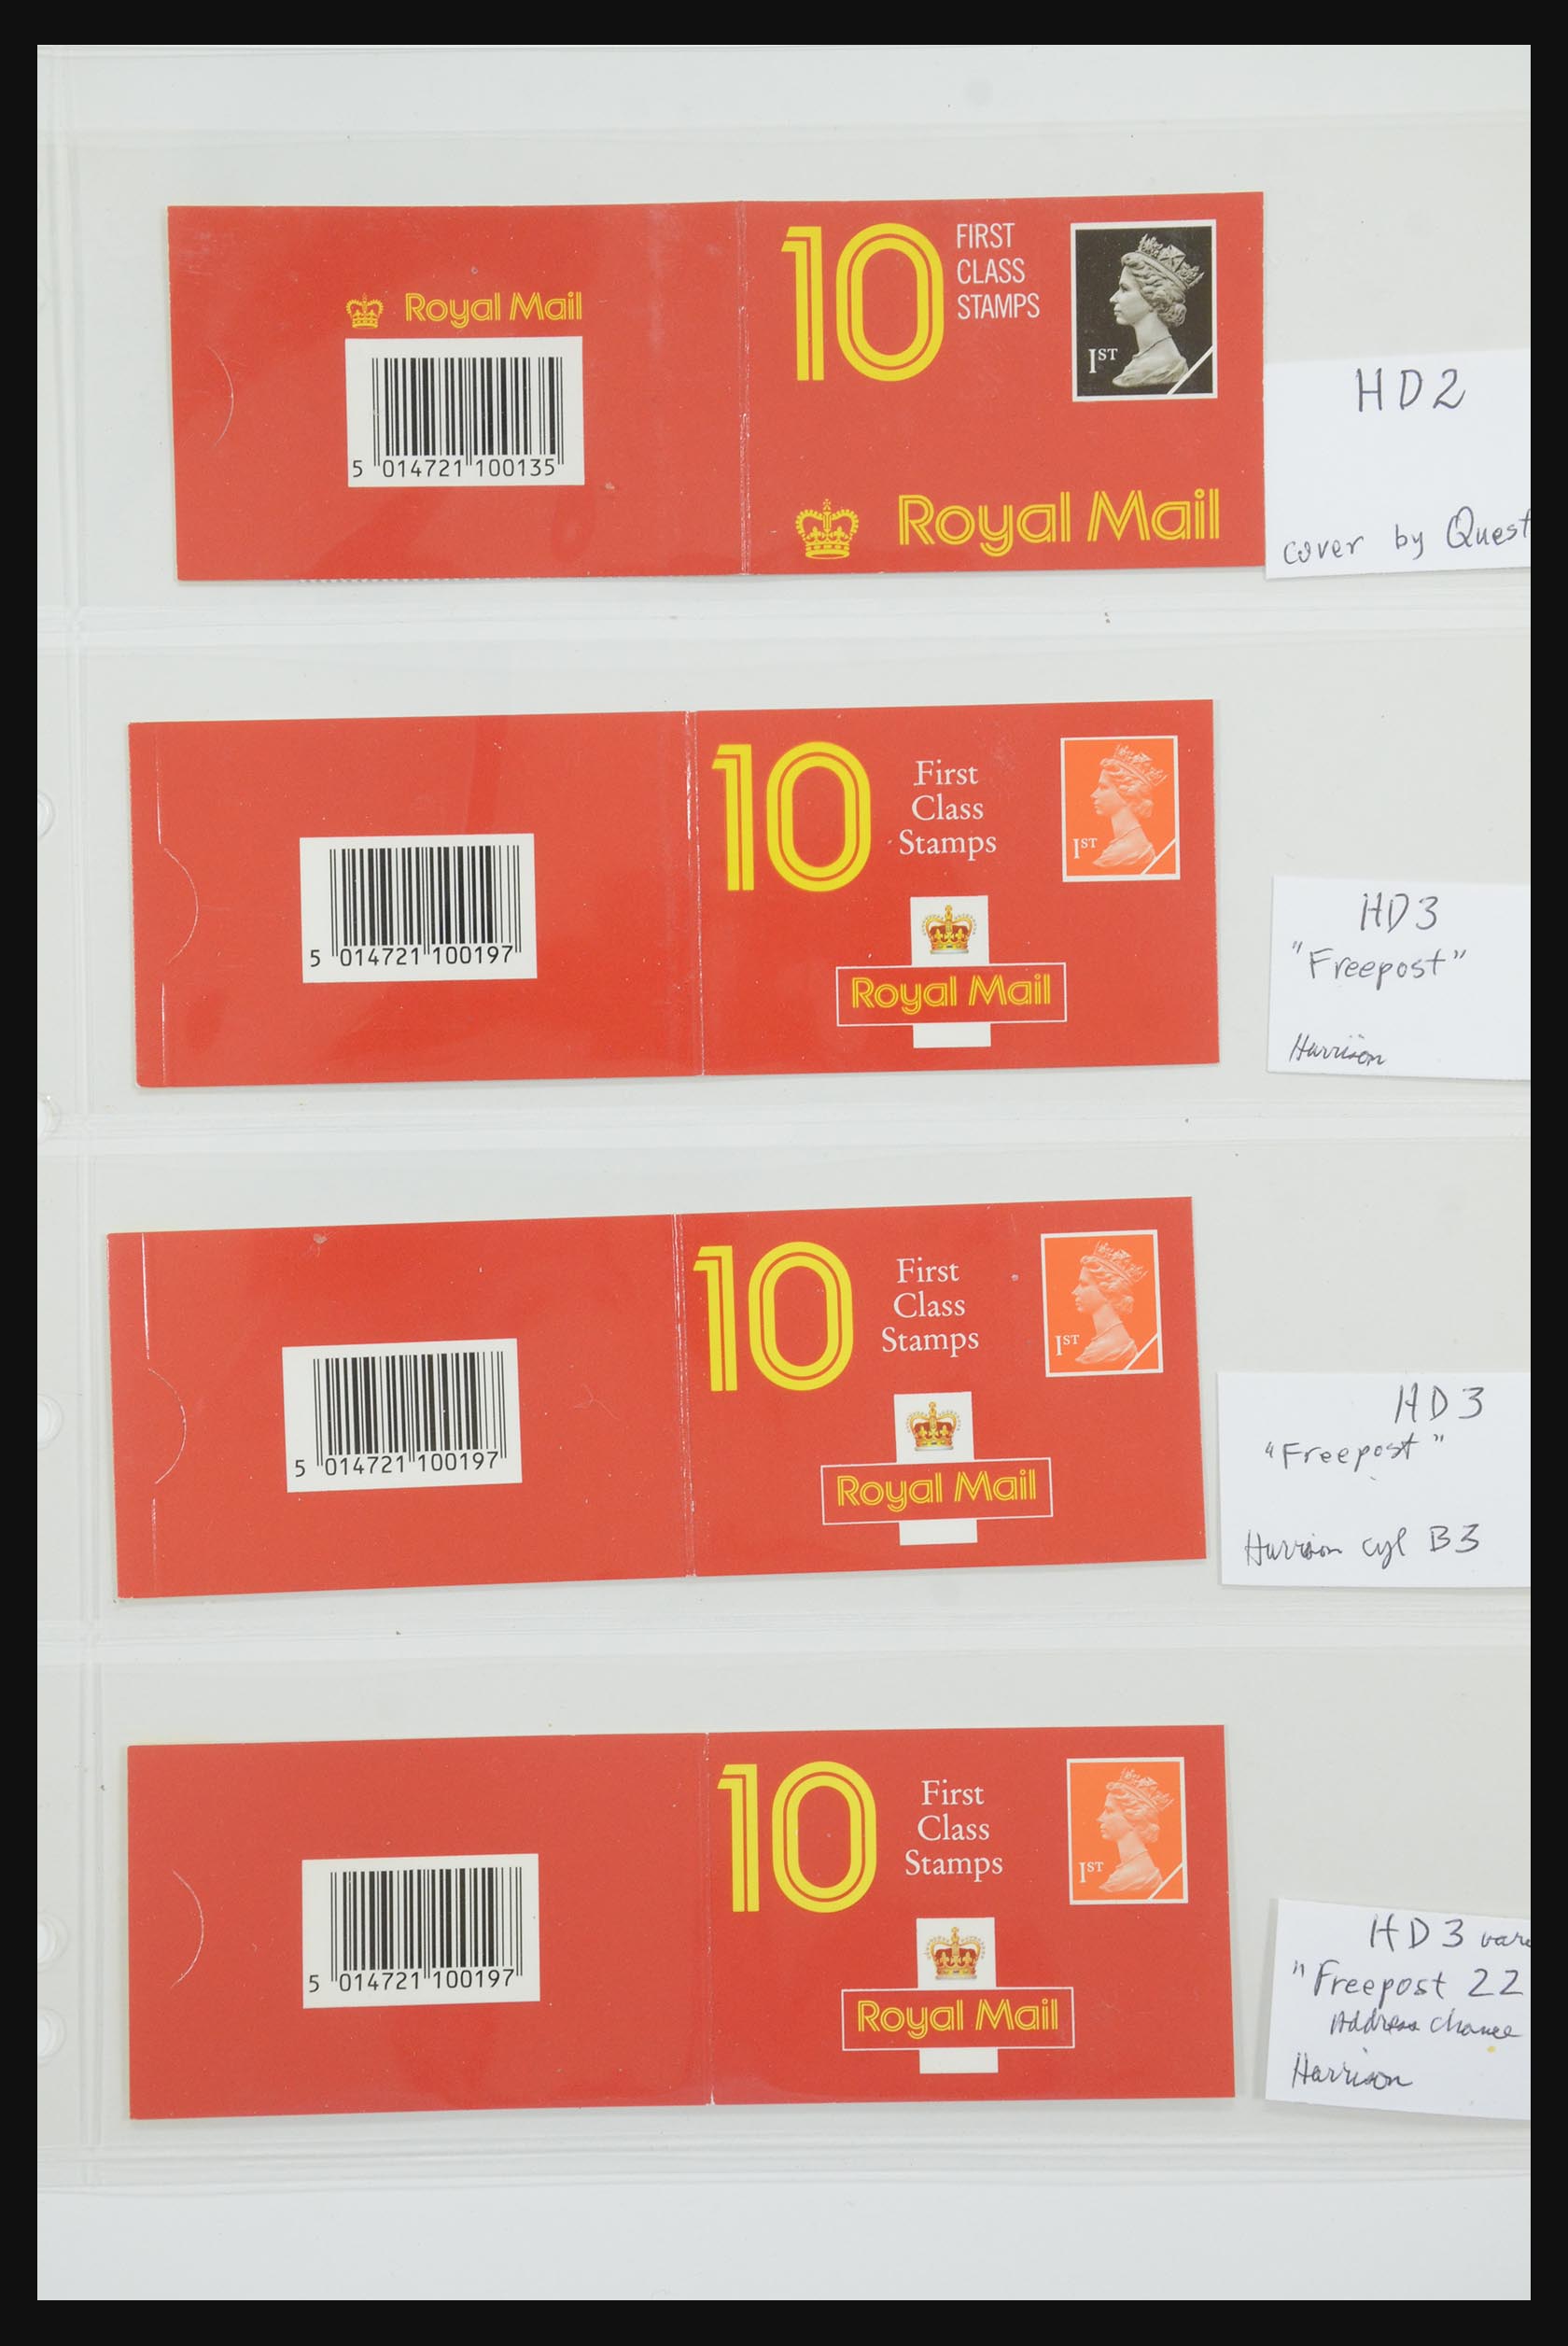 31959 089 - 31959 Great Britain stampbooklets 1987-2016!!